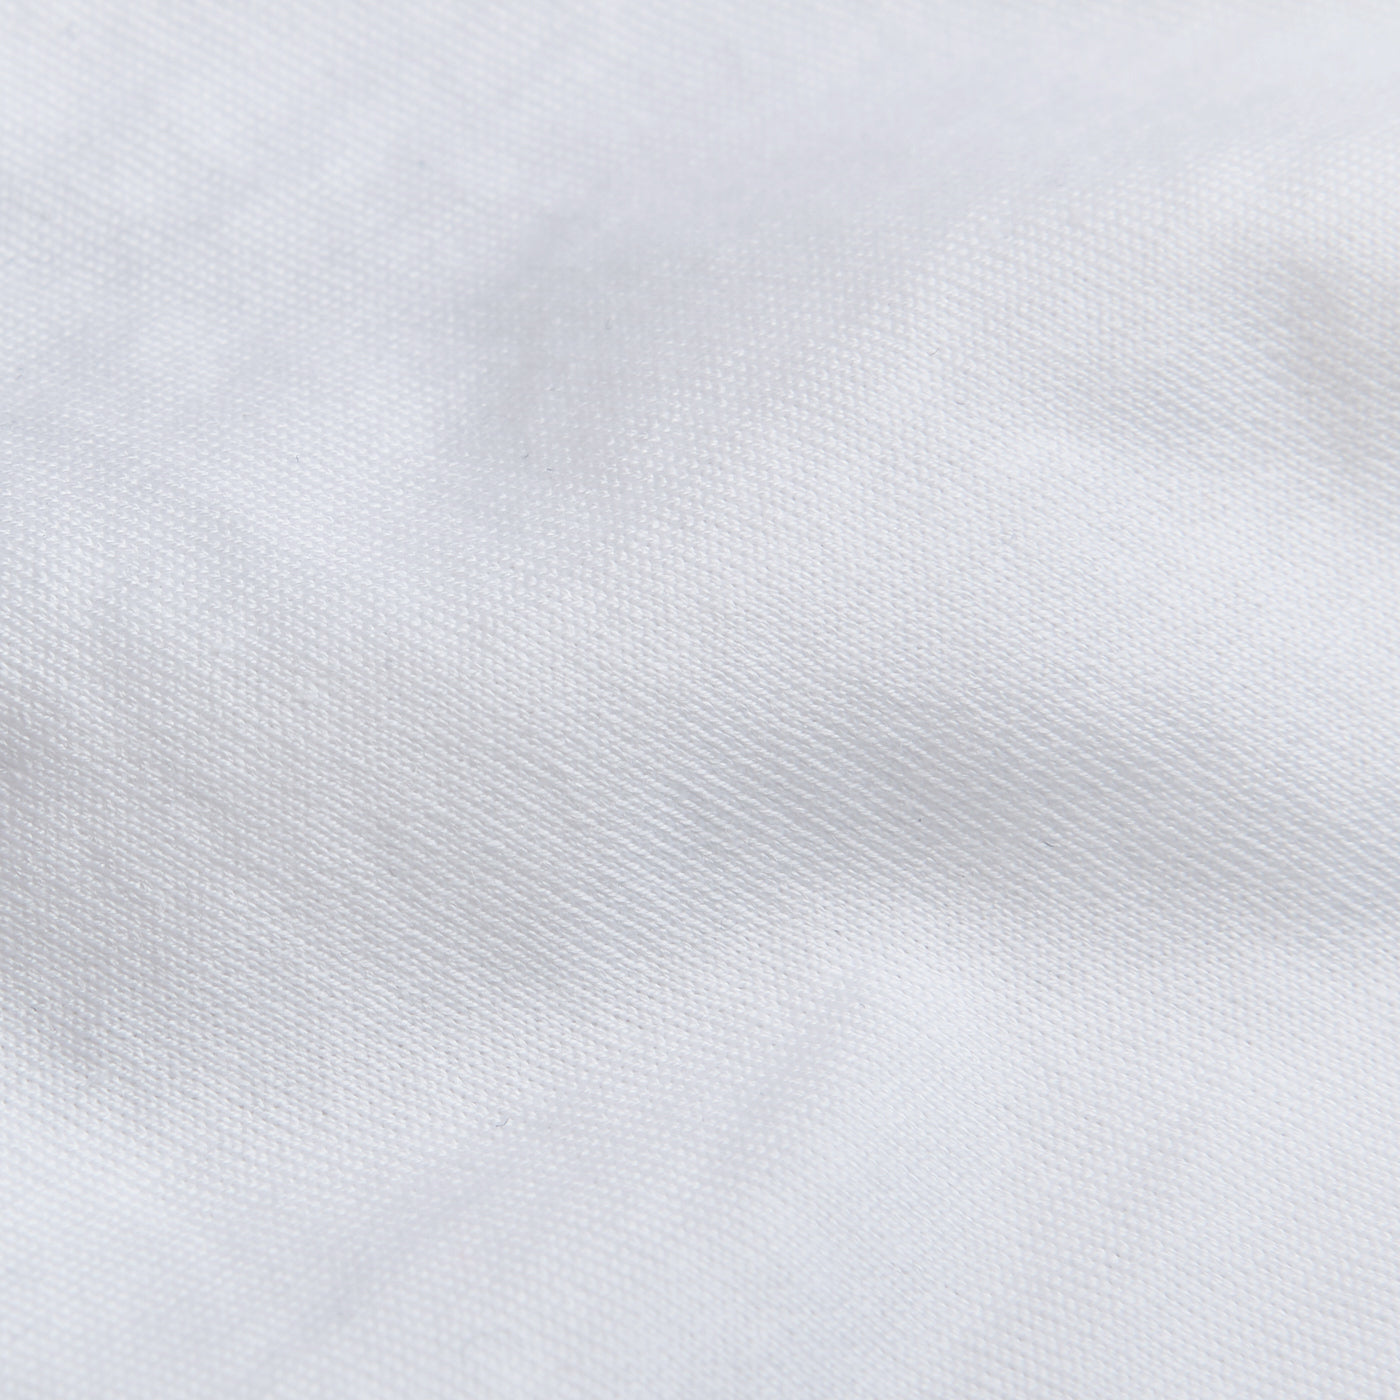 Canali White Long Staple Cotton T-Shirt Fabric